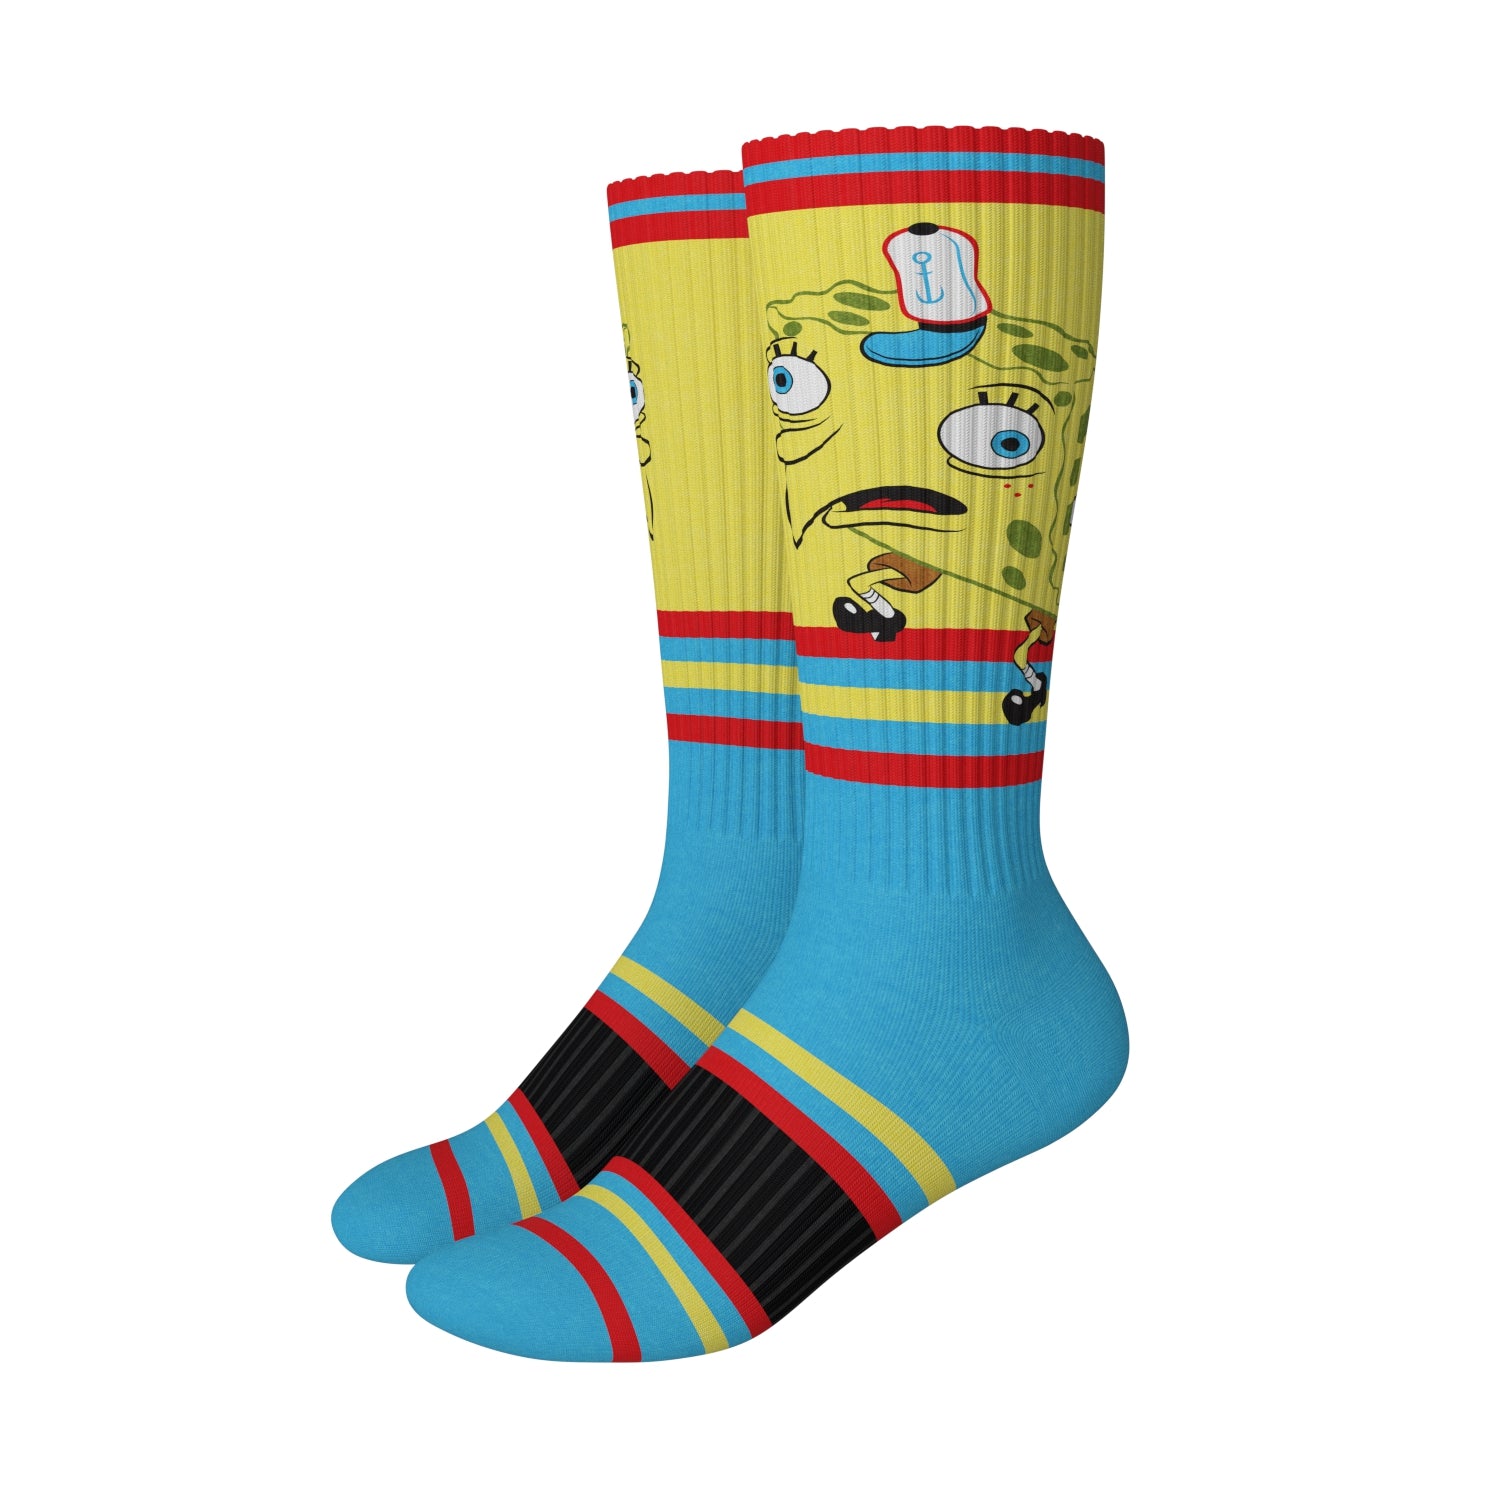 Spongebob Squarepants Graphic - Meme Socks for Sale by Mariascientist